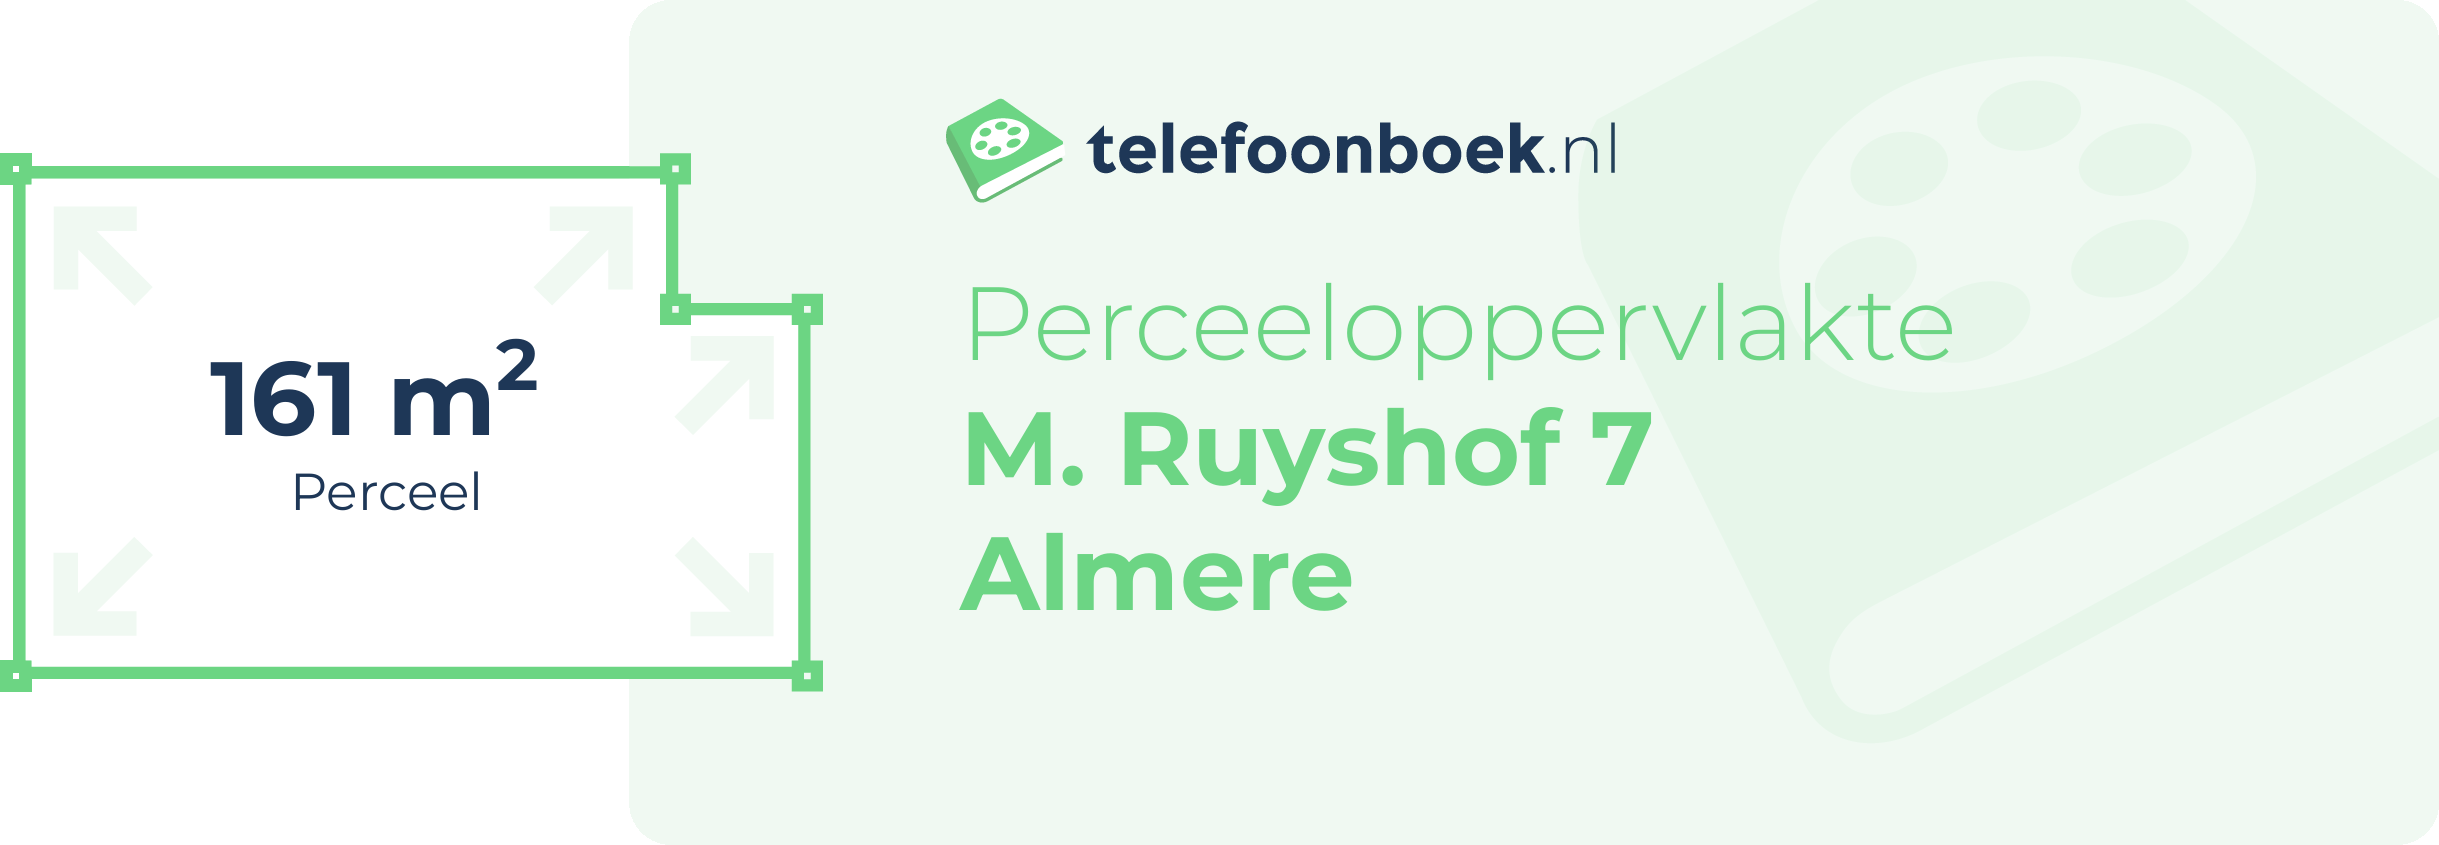 Perceeloppervlakte M. Ruyshof 7 Almere